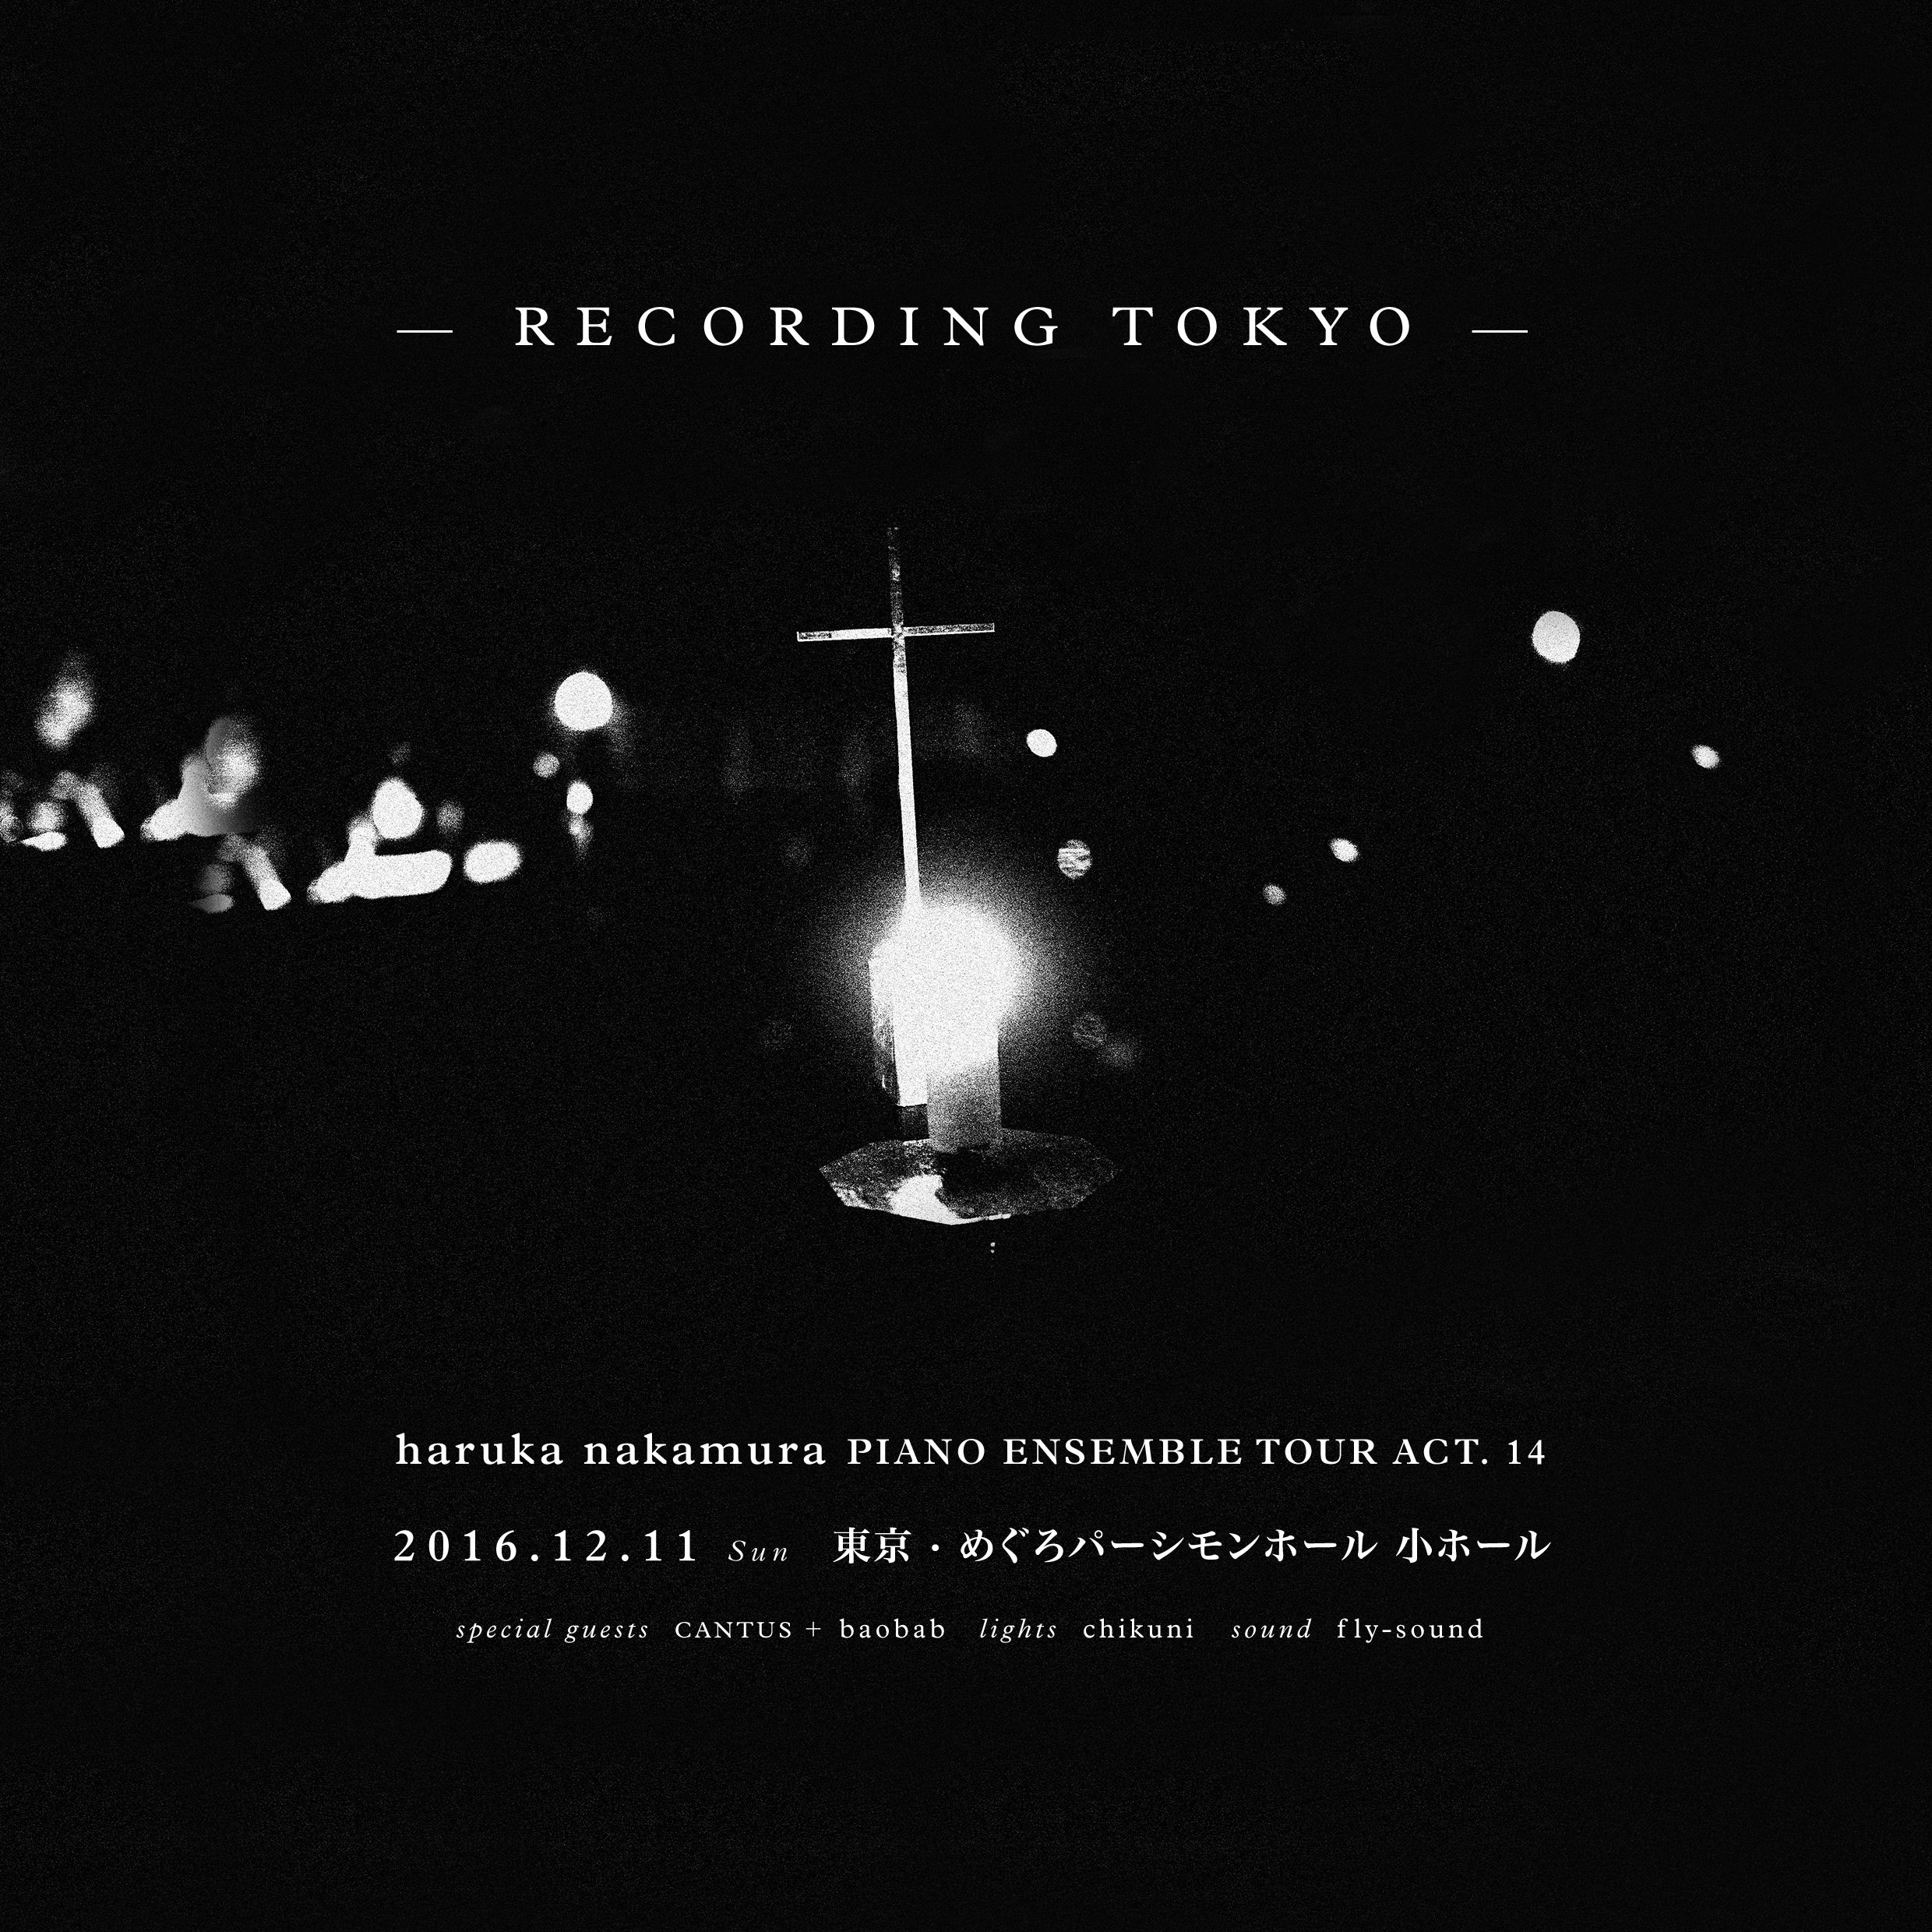 haruka nakamura PIANO ENSEMBLE TOUR ACT.14　 - RECORDING TOKYO -